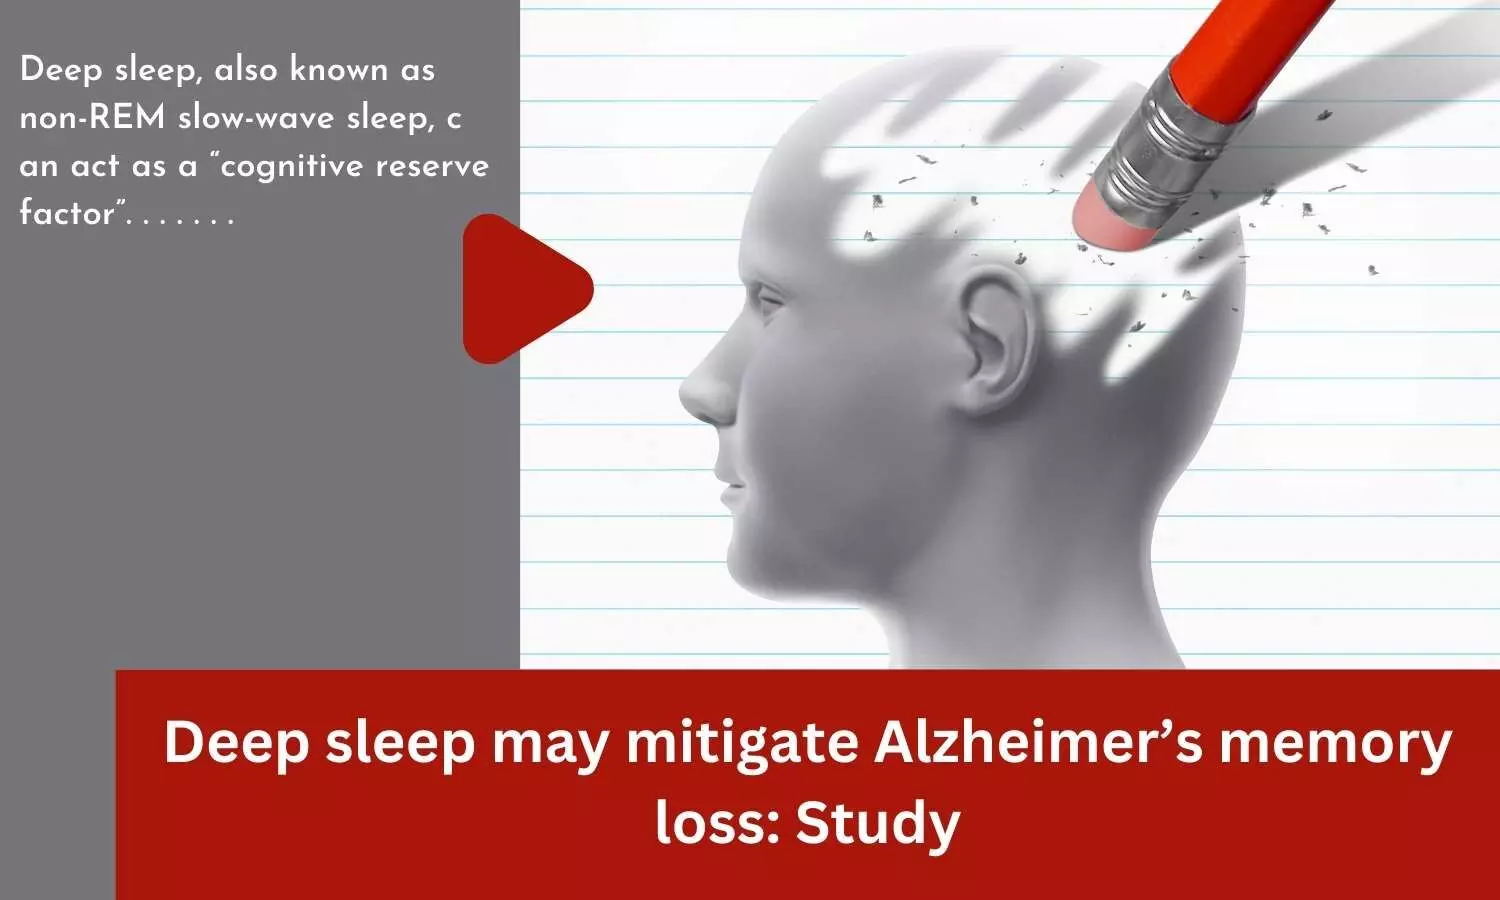 Deep sleep may mitigate Alzheimers memory loss: Study